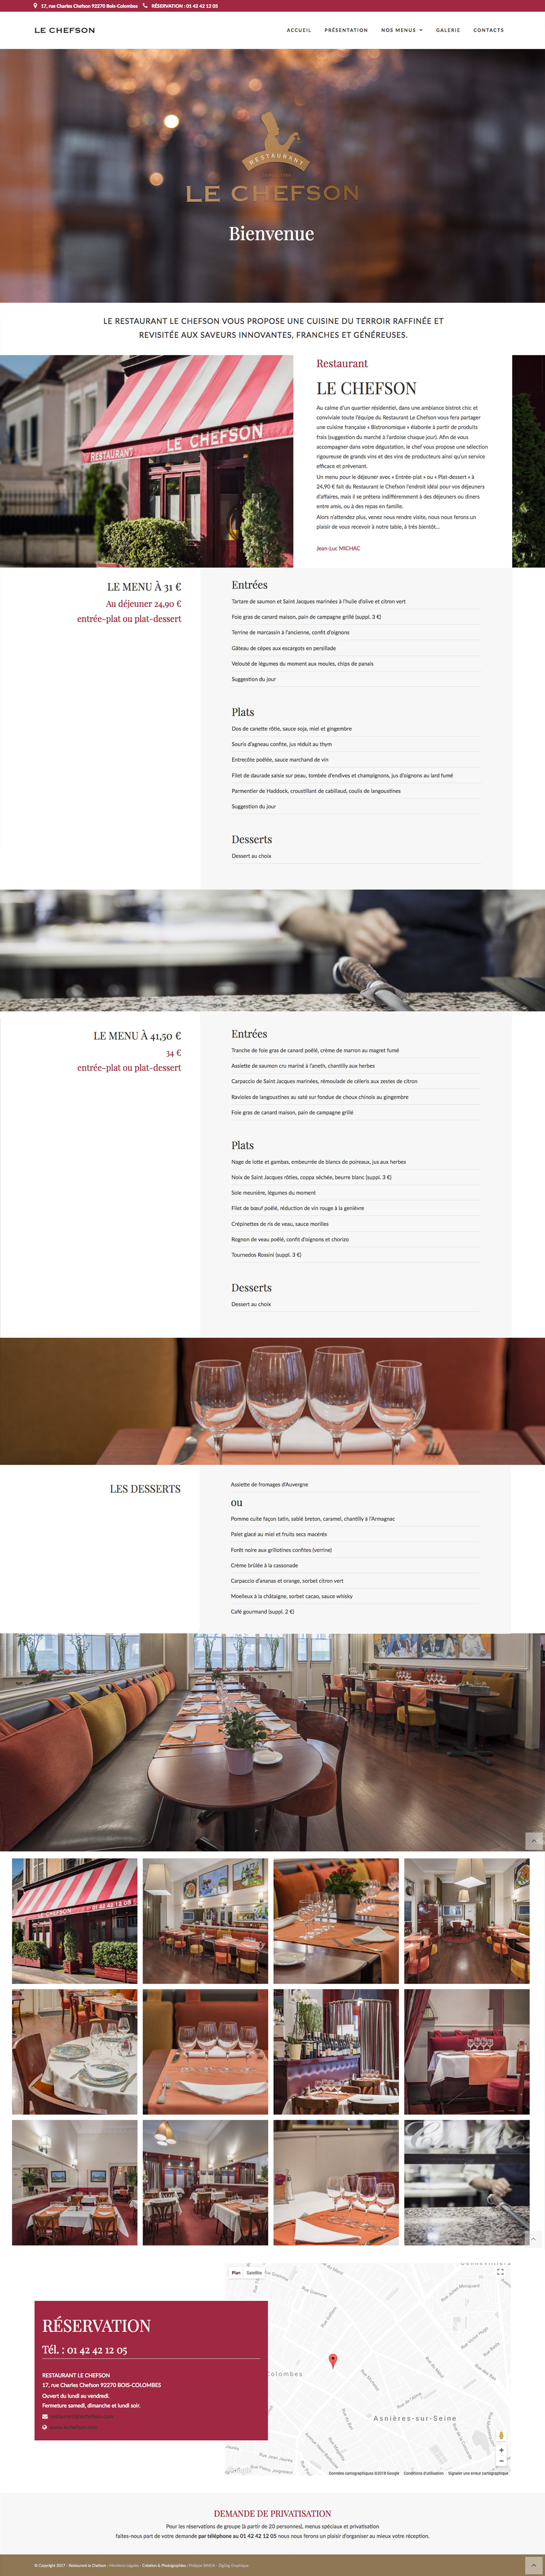 creation-site internet-restaurant Le chefson-bois-colombes